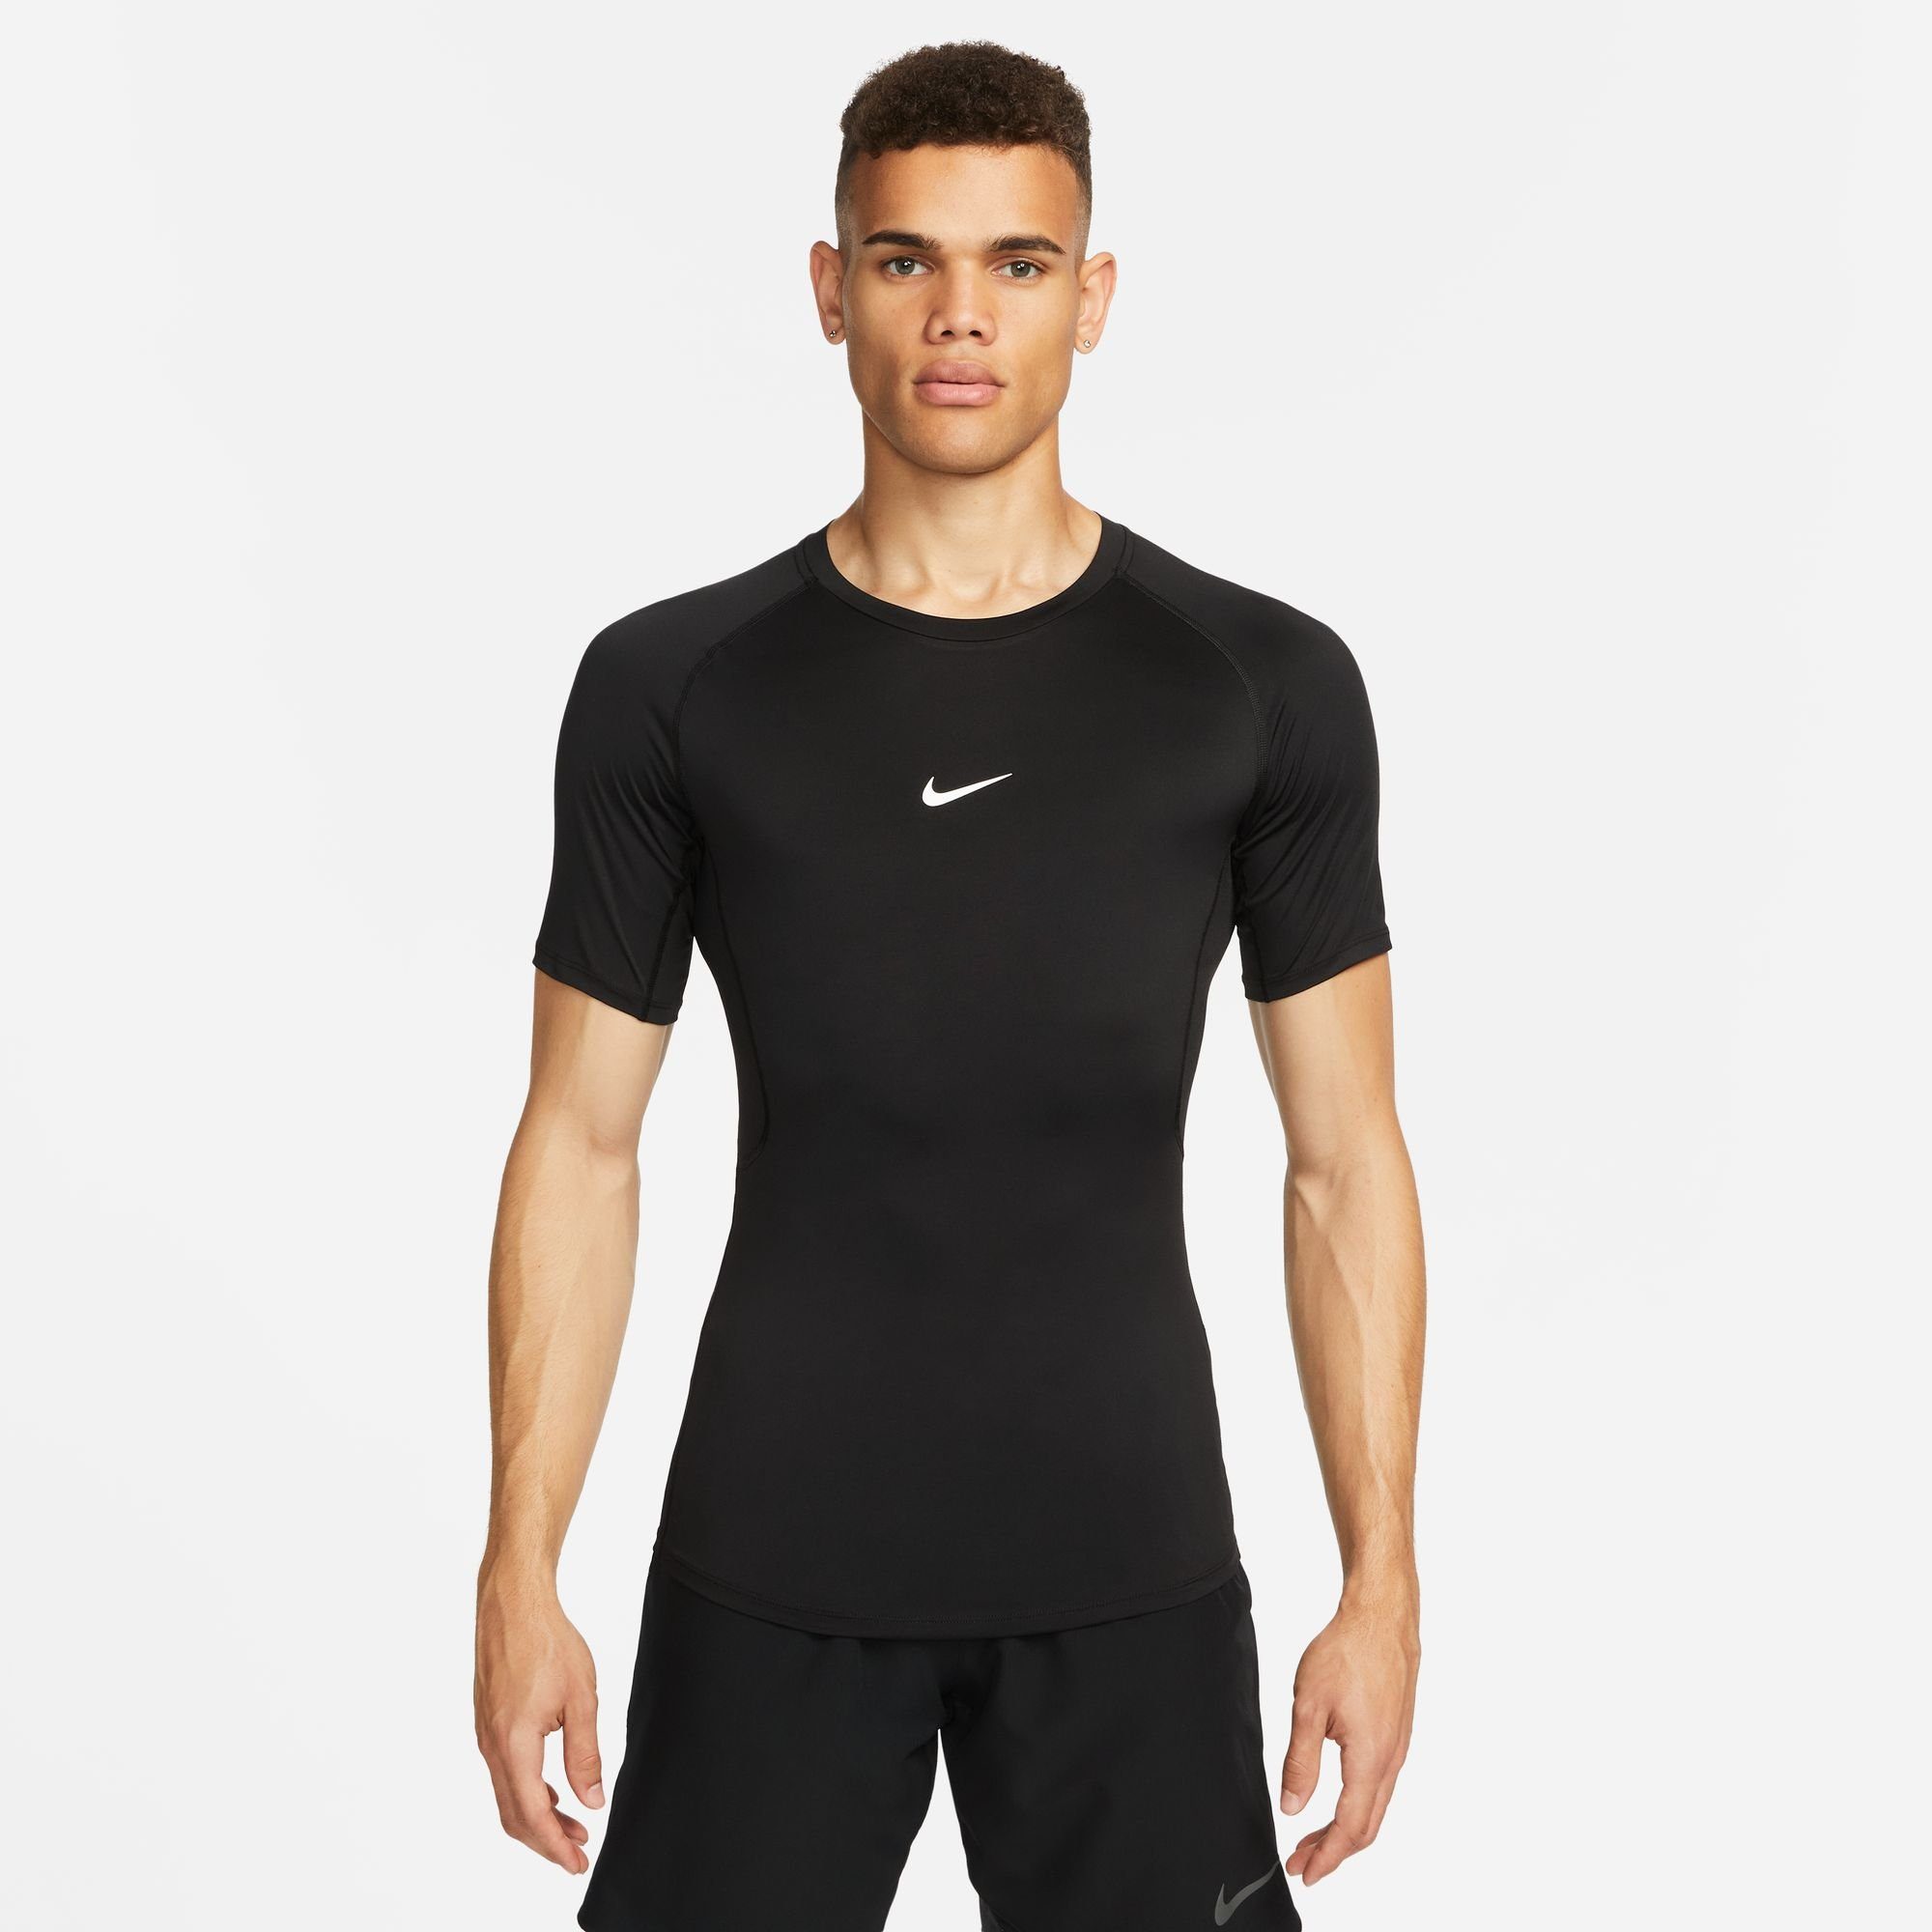 Großer Rabatt-SALE MEN'S Nike TOP TIGHT PRO DRI-FIT SHORT-SLEEVE Trainingsshirt